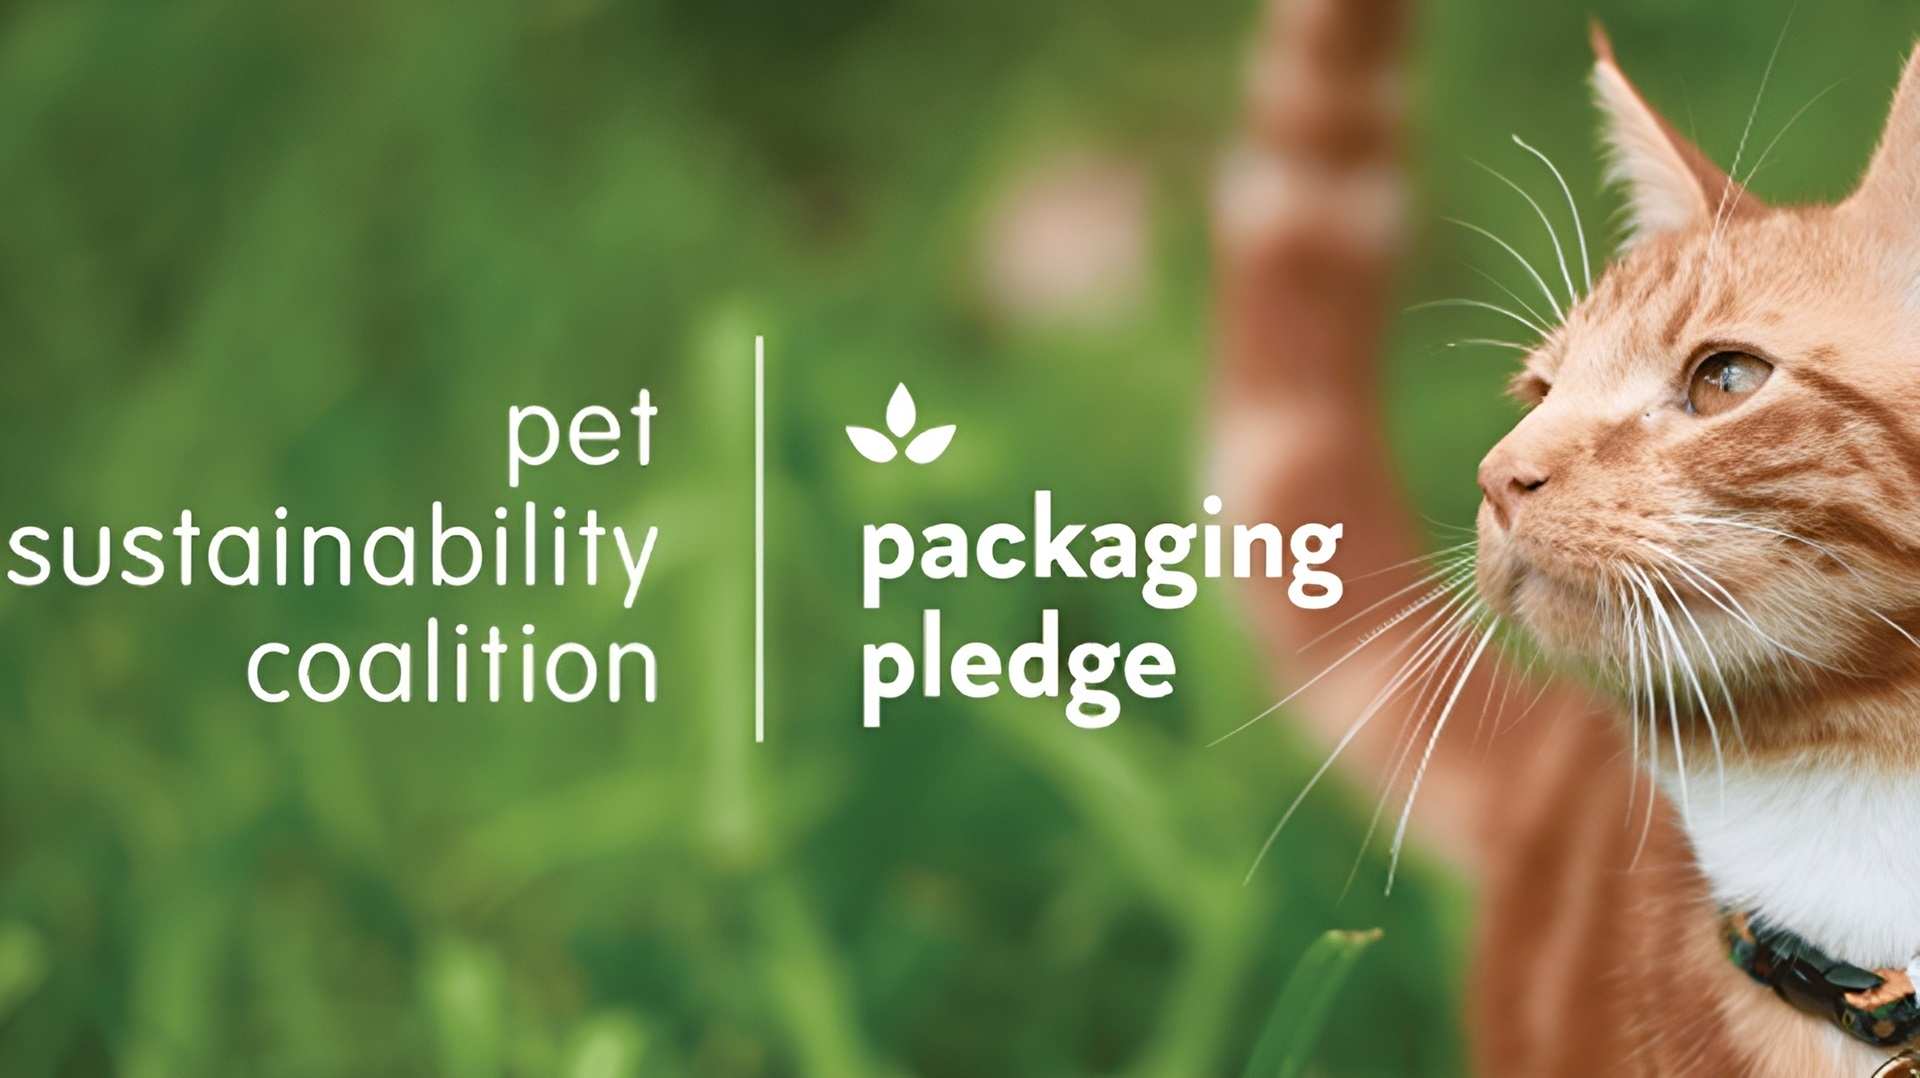 Chiến dịch “The Packaging Pledge” (Cam kết Bao bì)